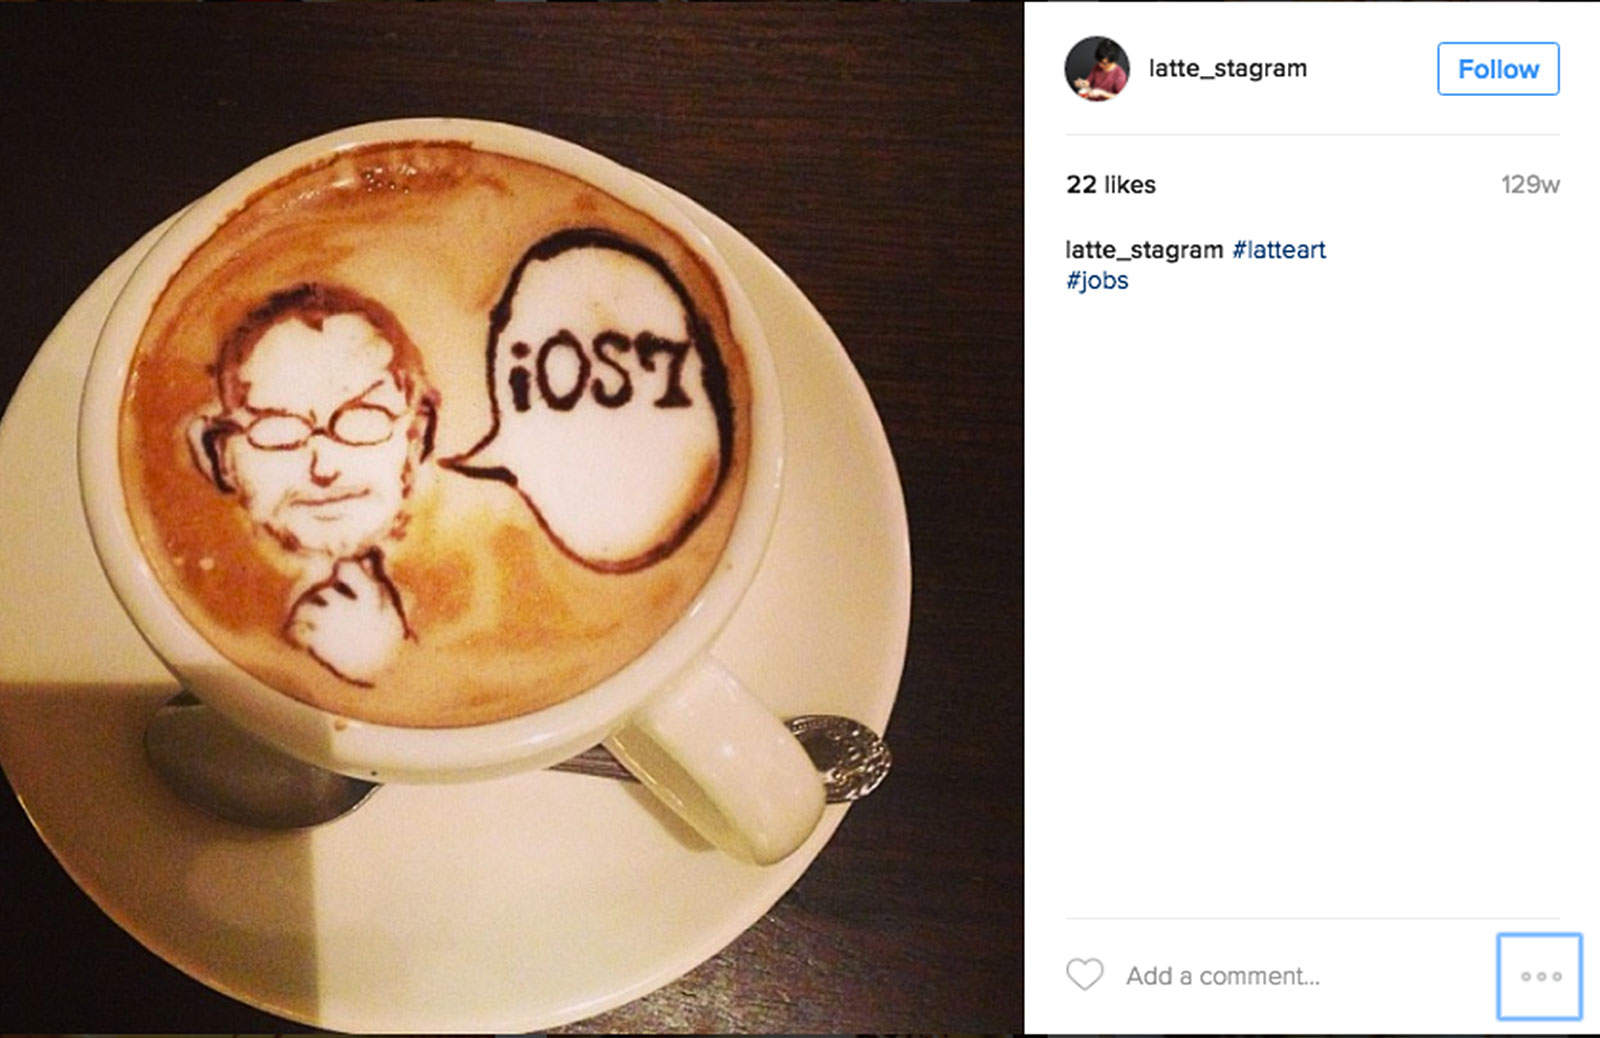 Steve Jobs appears from a swirl of milk and coffee in latte art by Kohei Matsuno.